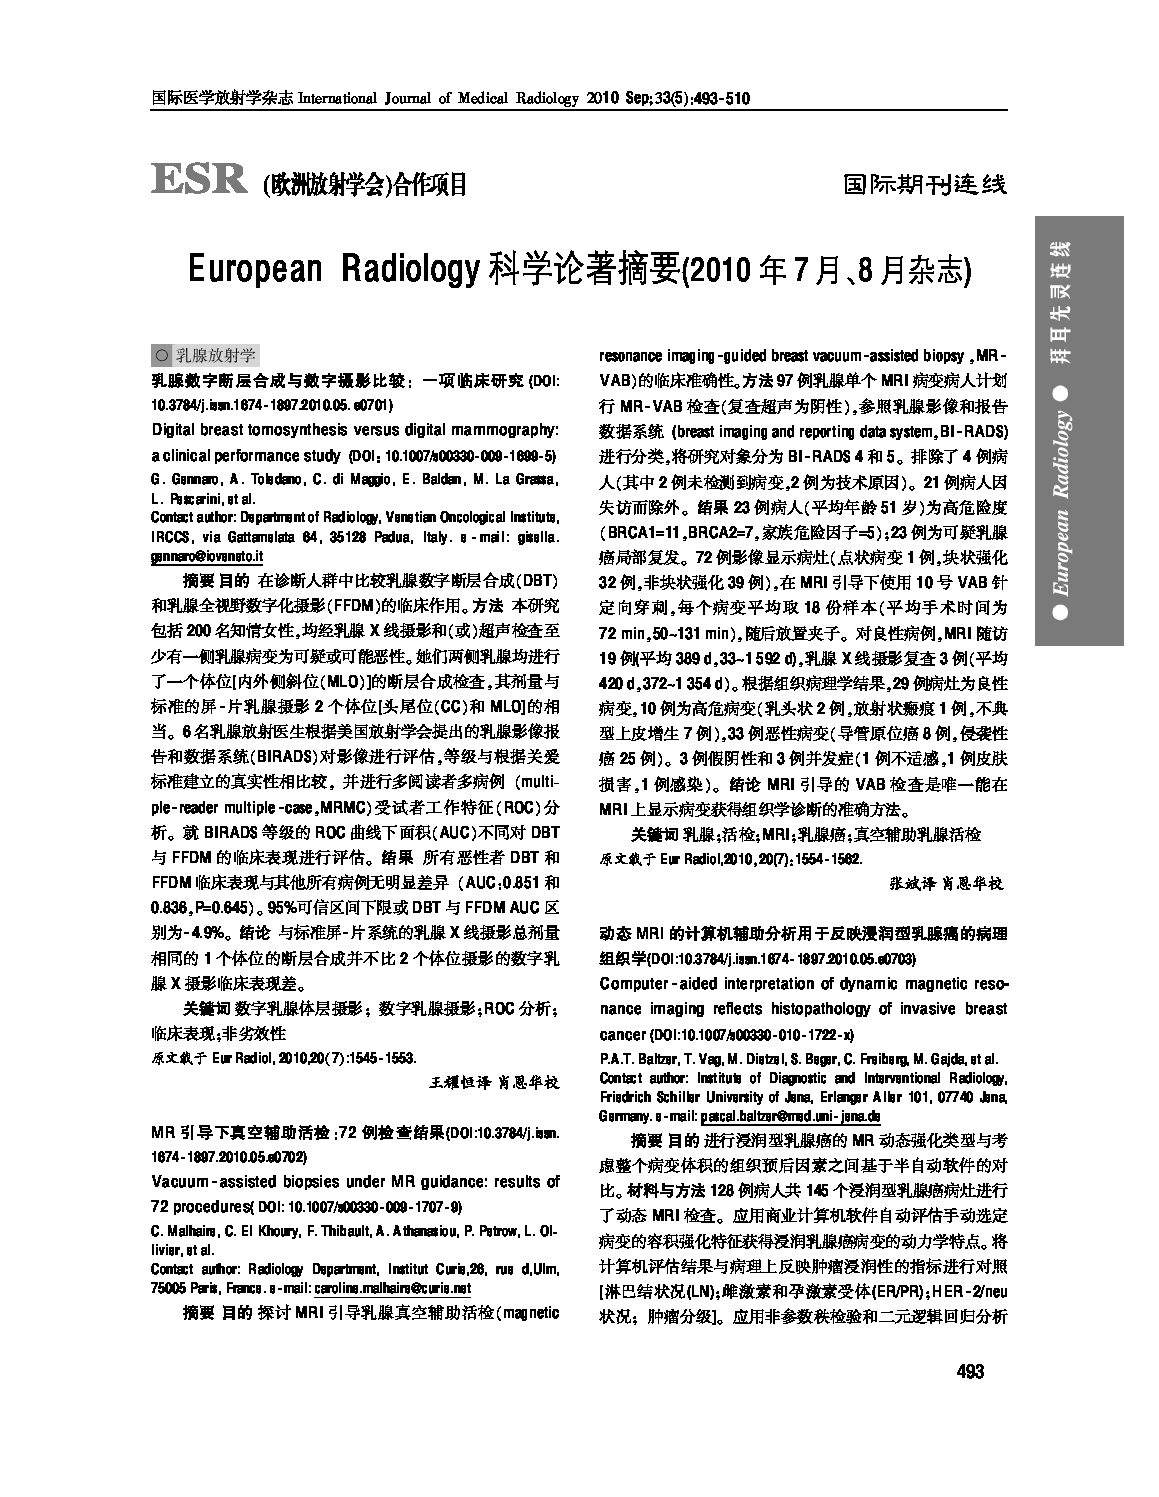 European Radiology Vol. 2010, July-August (1.5MB)